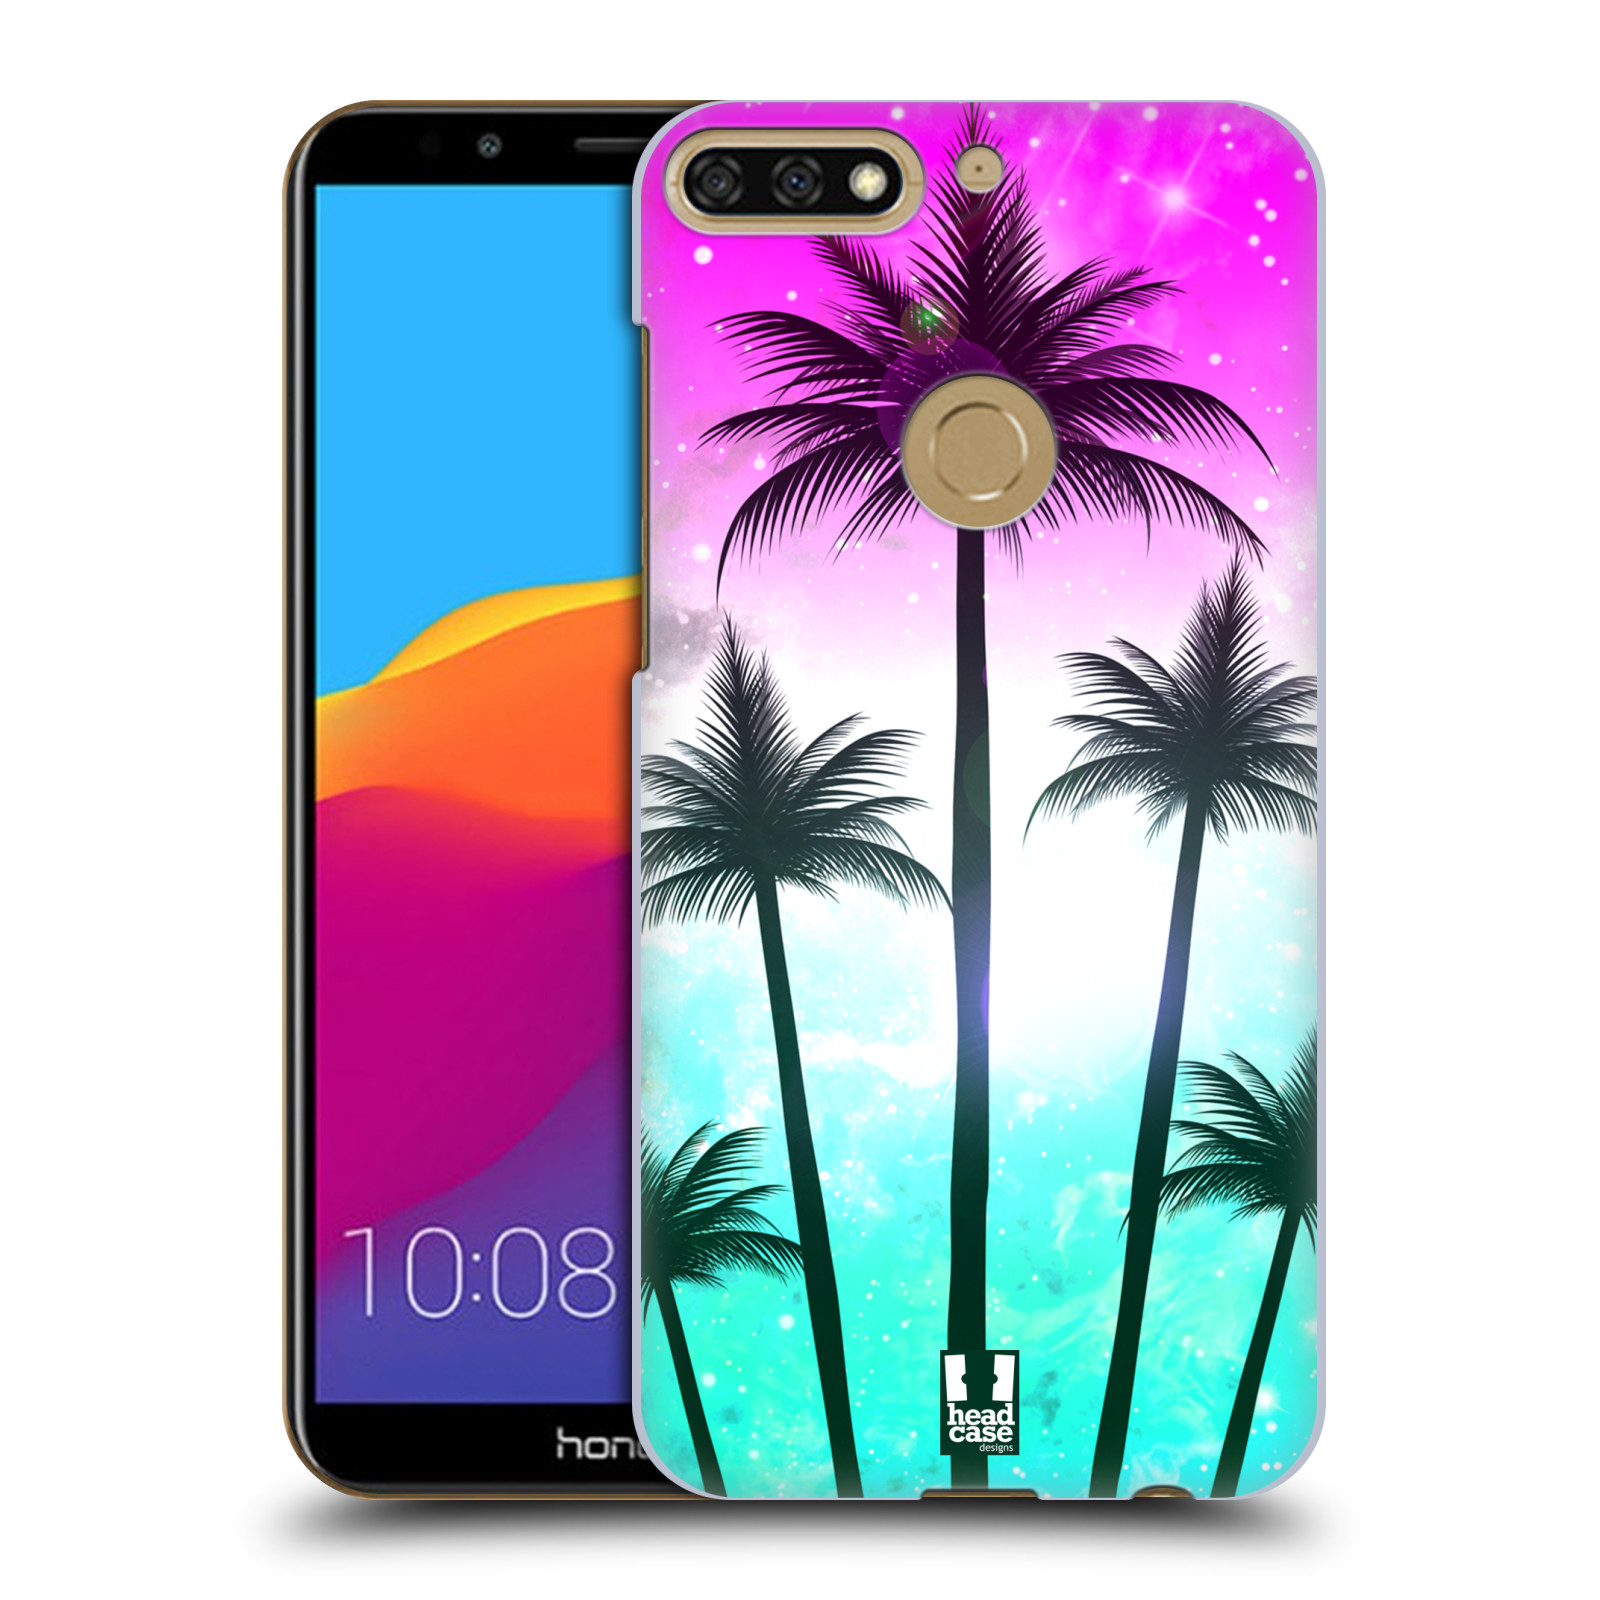 HEAD CASE plastový obal na mobil Honor 7c vzor Kreslený motiv silueta moře a palmy RŮŽOVÁ A TYRKYS